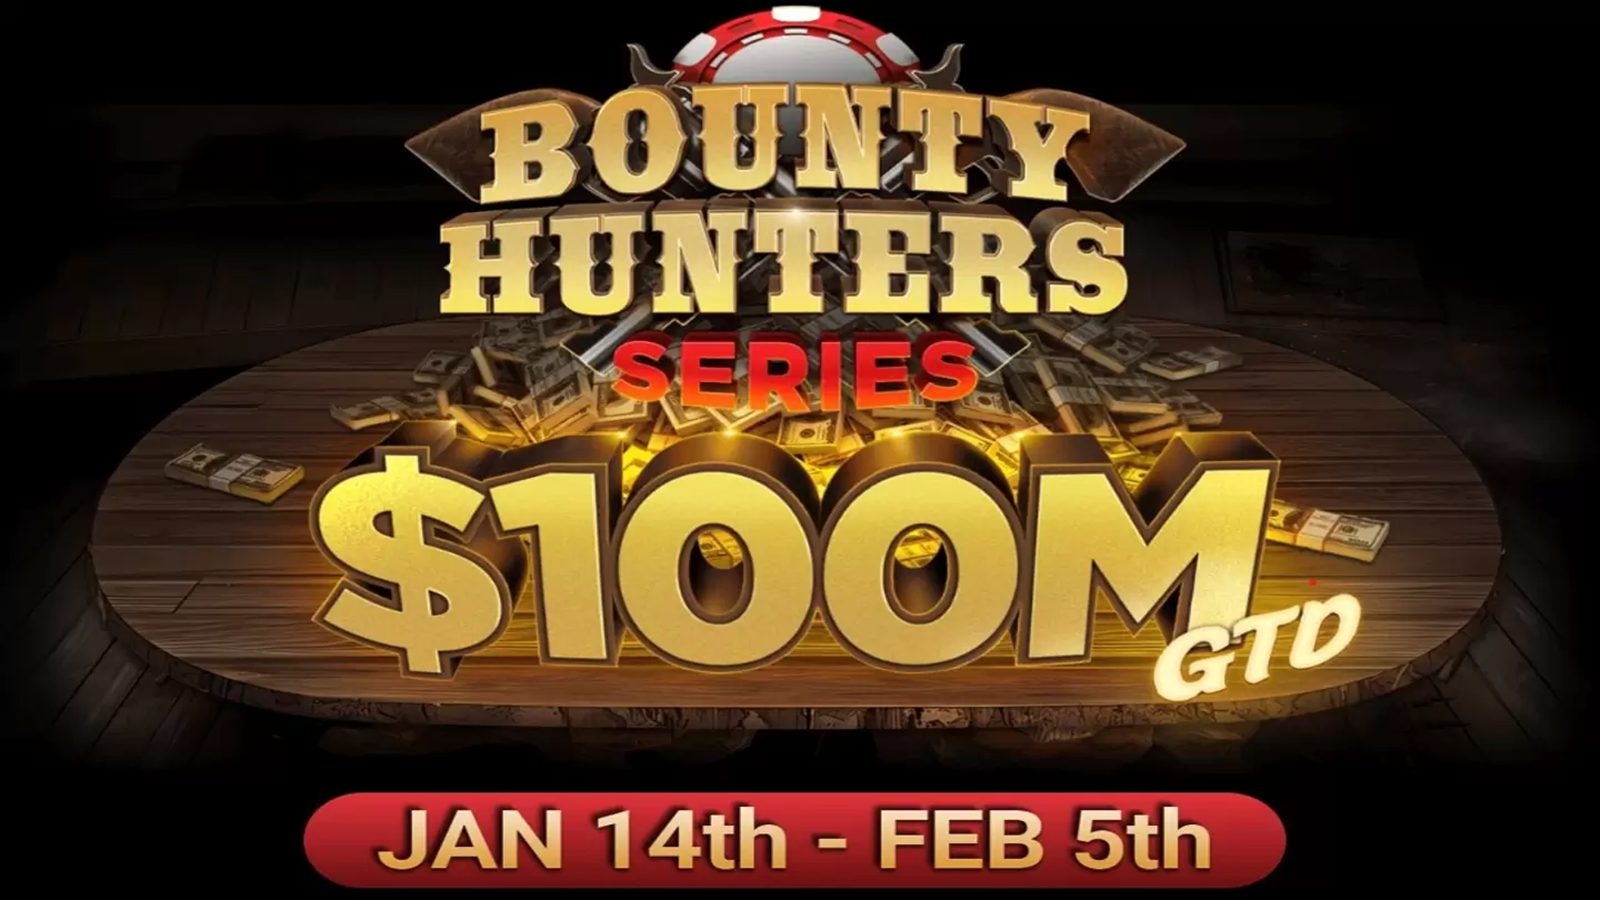 GGPoker's $100M Bounty Hunters Series